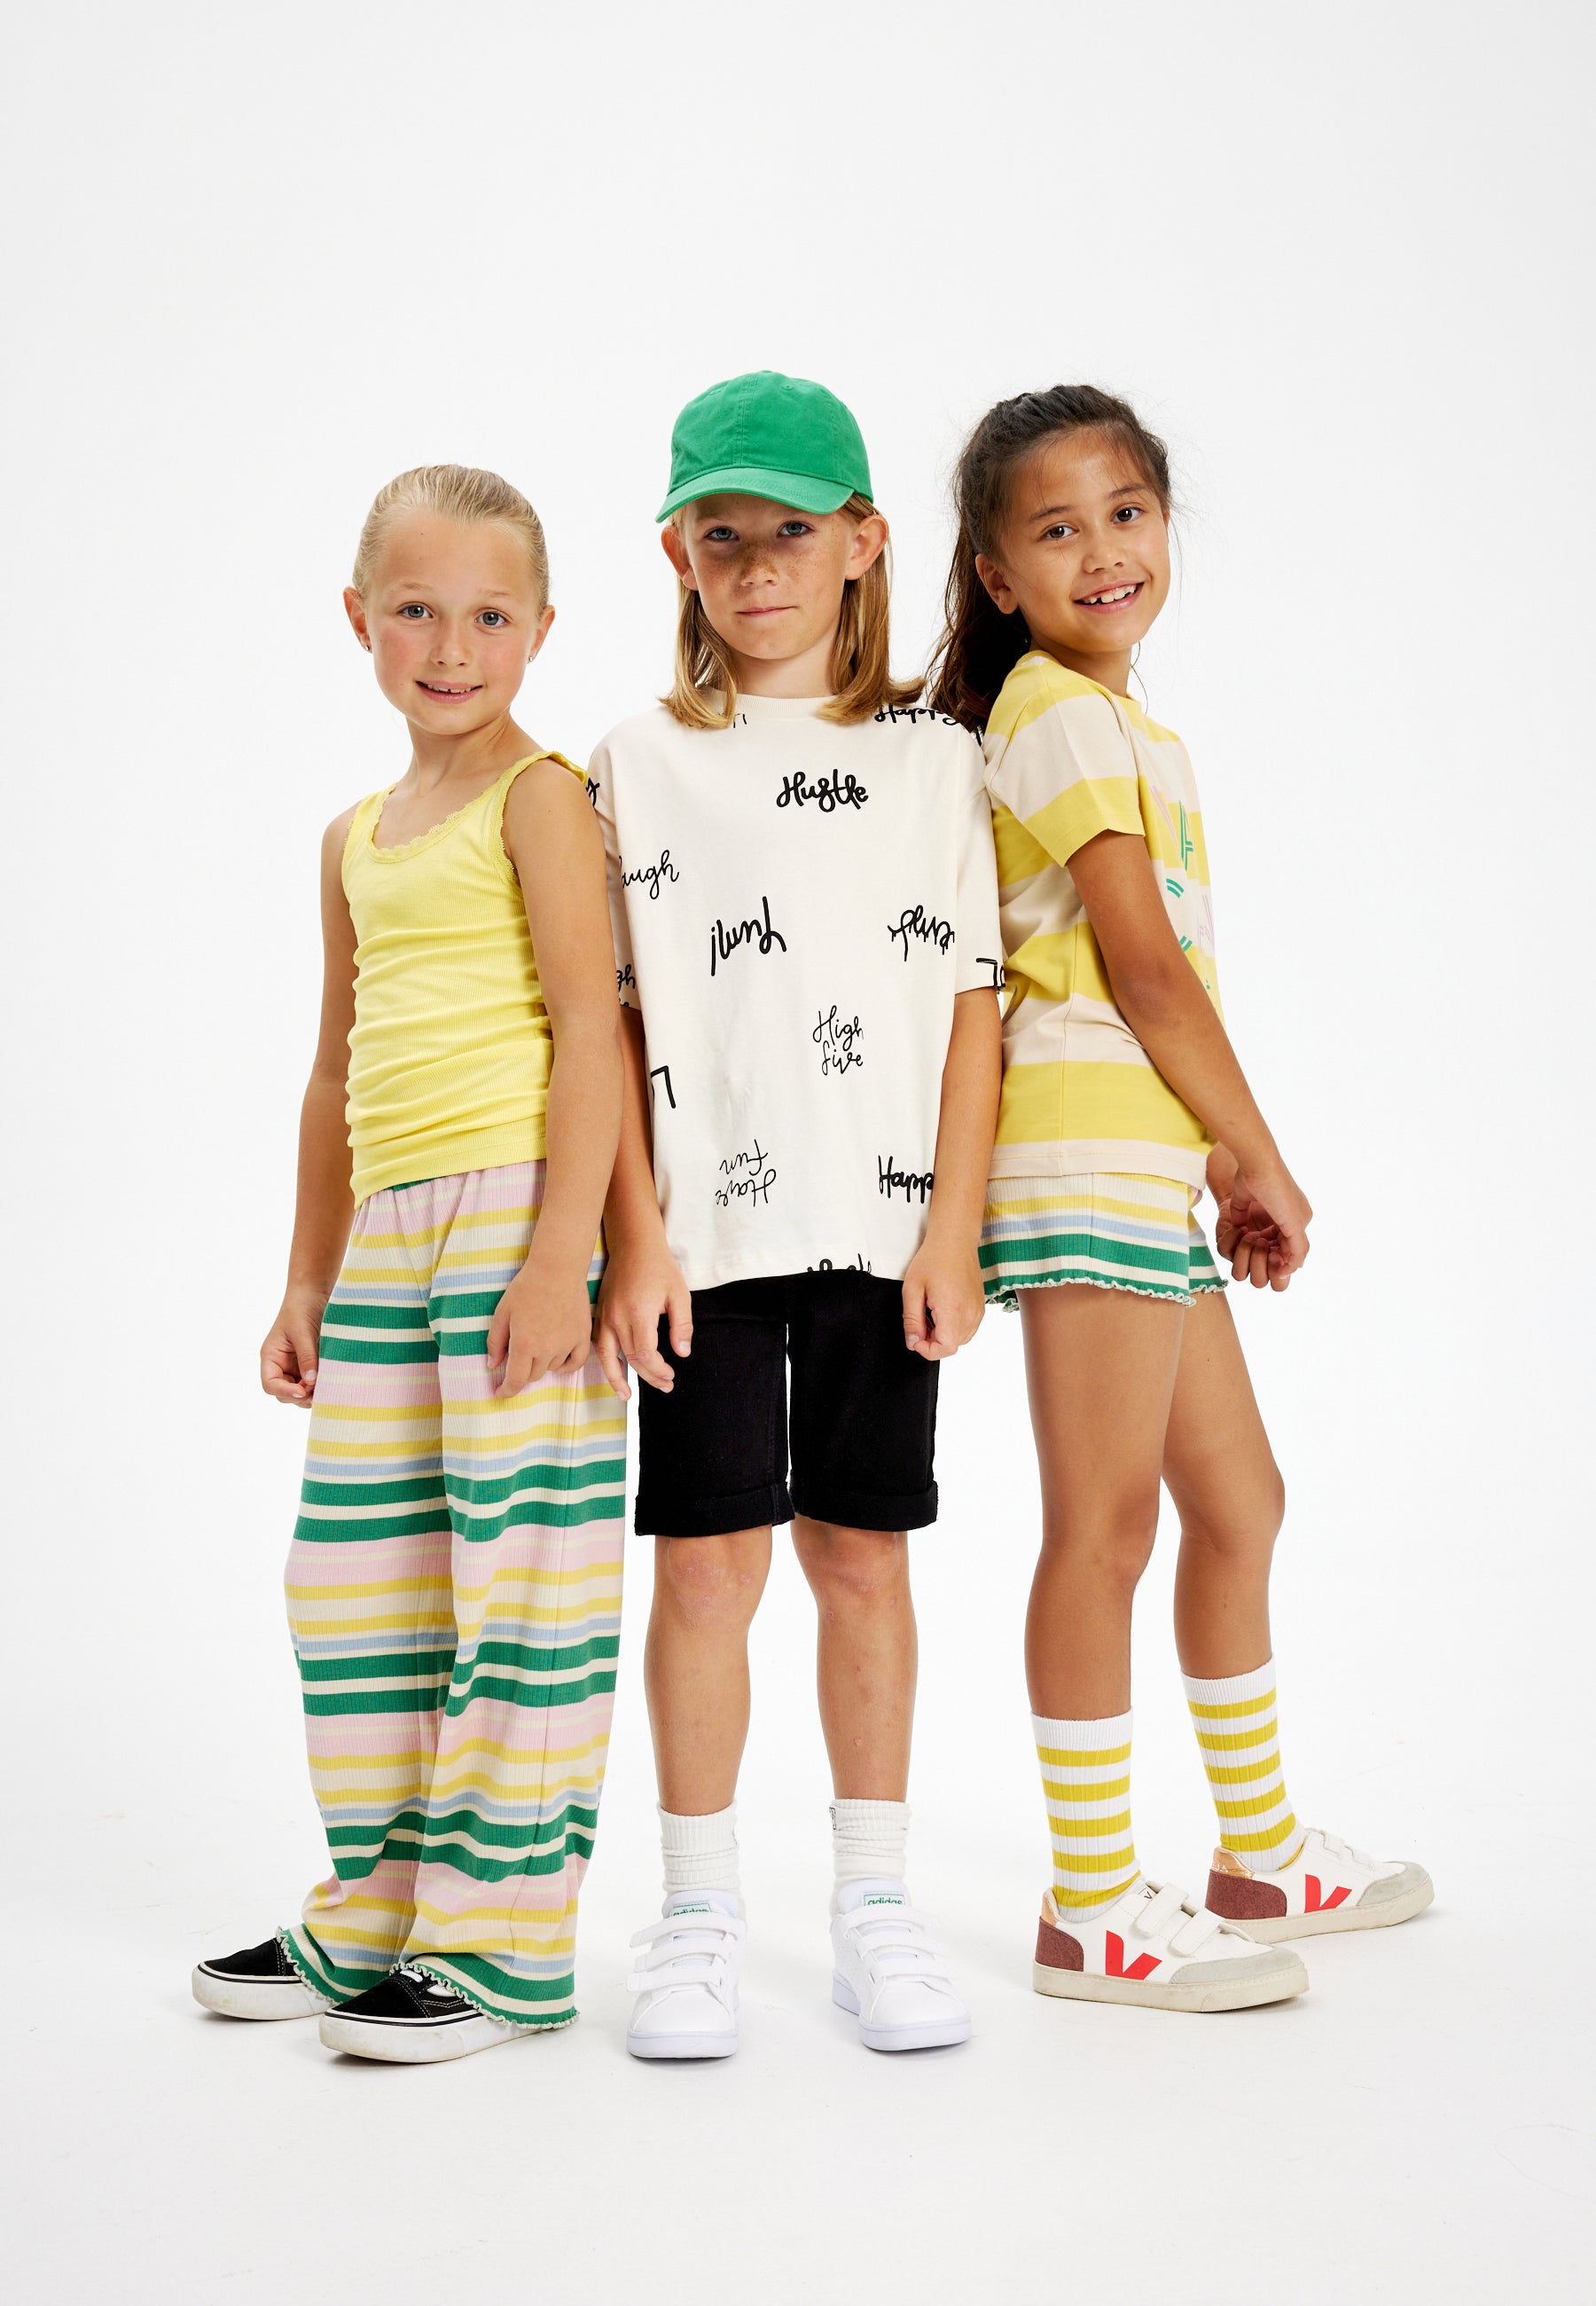 Shop børnetøj fra THE NEW - find bl.a. nye styles fra Autumn23 kollektionen